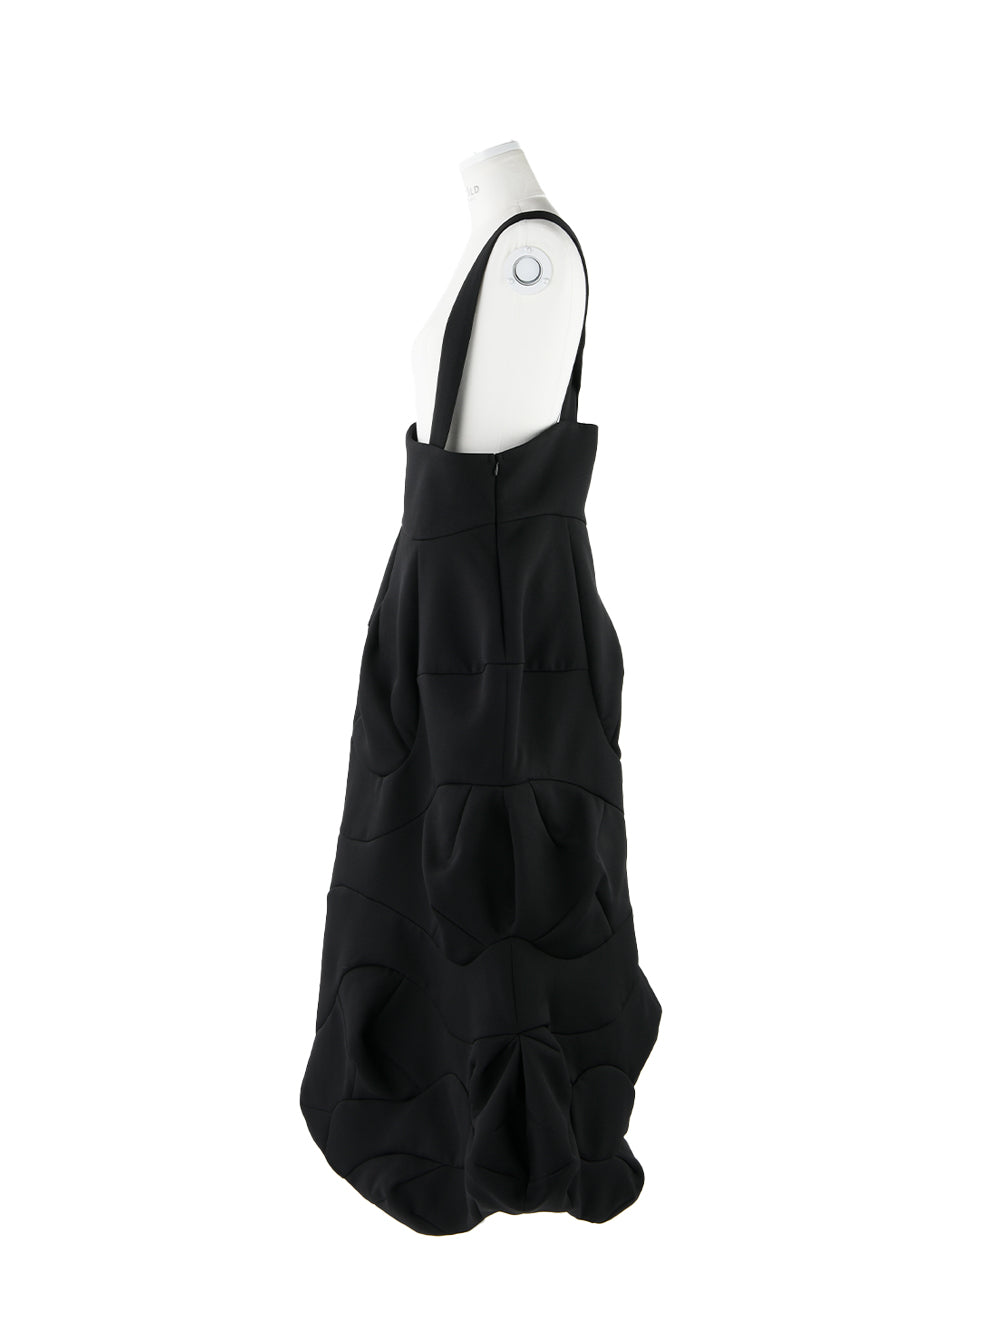 Wave Overalls Skirt (Black)